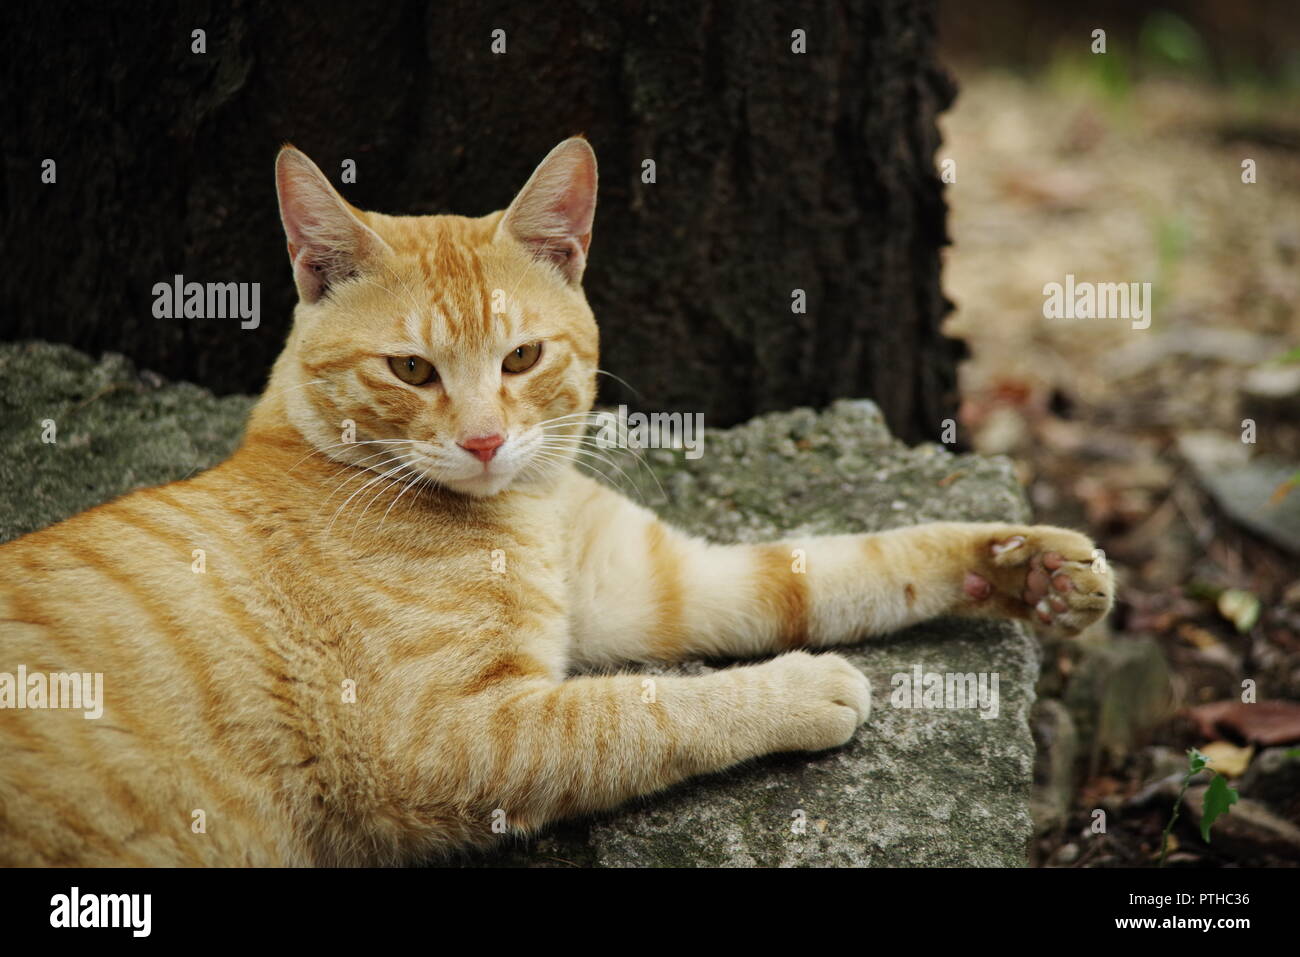 street cat in the forest, defocused backfround Stock Photo